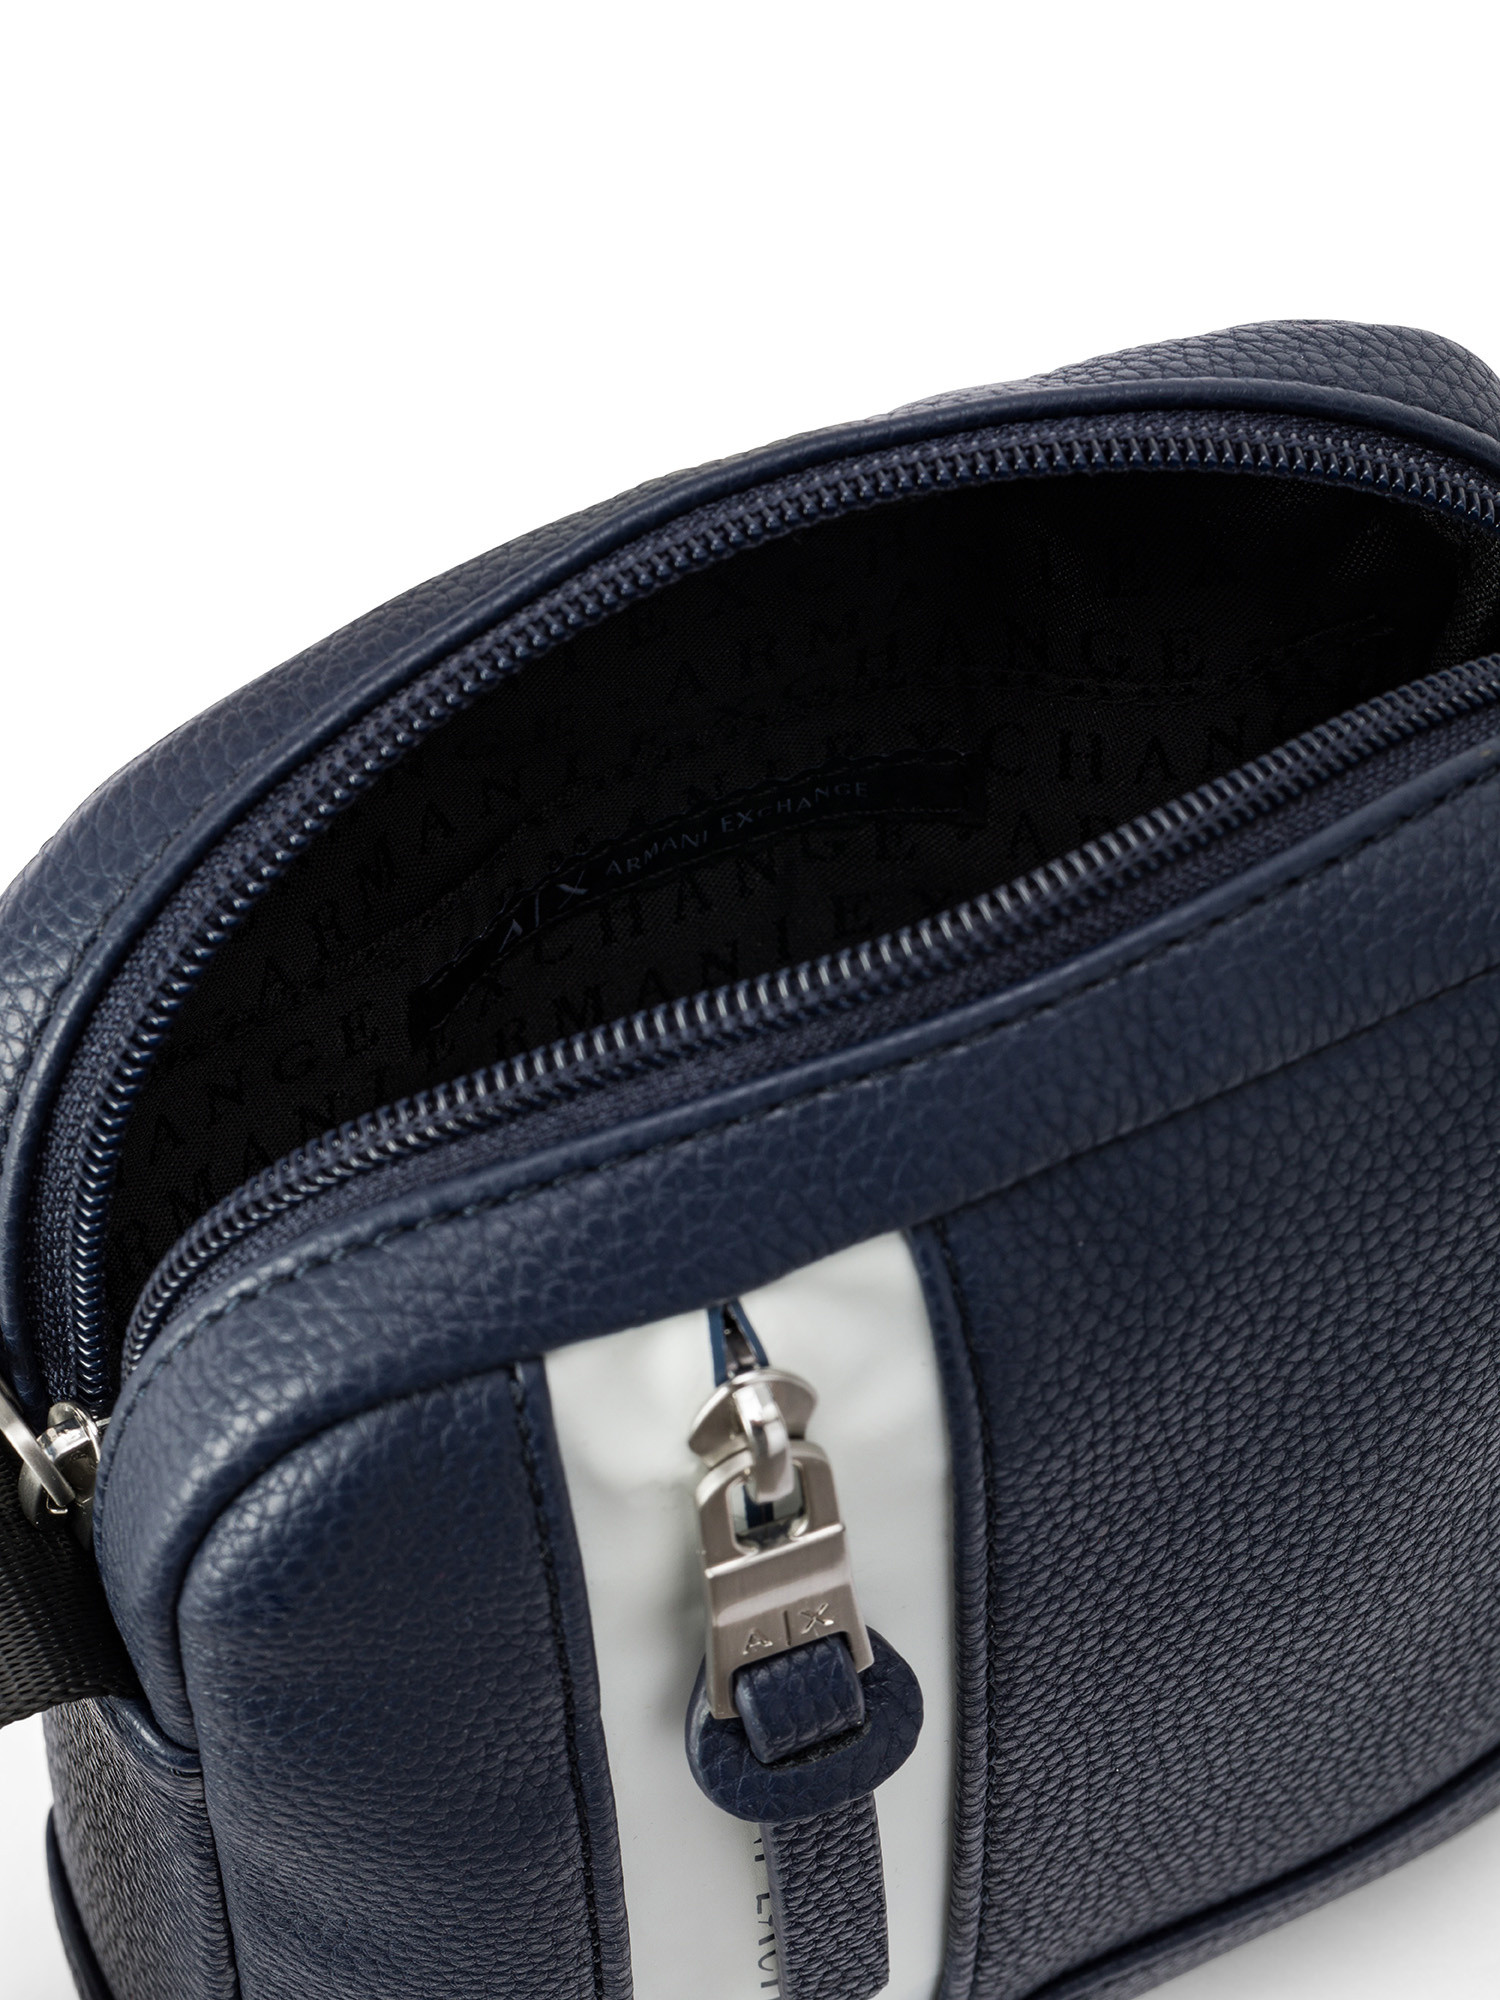 Armani Exchange - Bag with logo, Blue, large image number 2